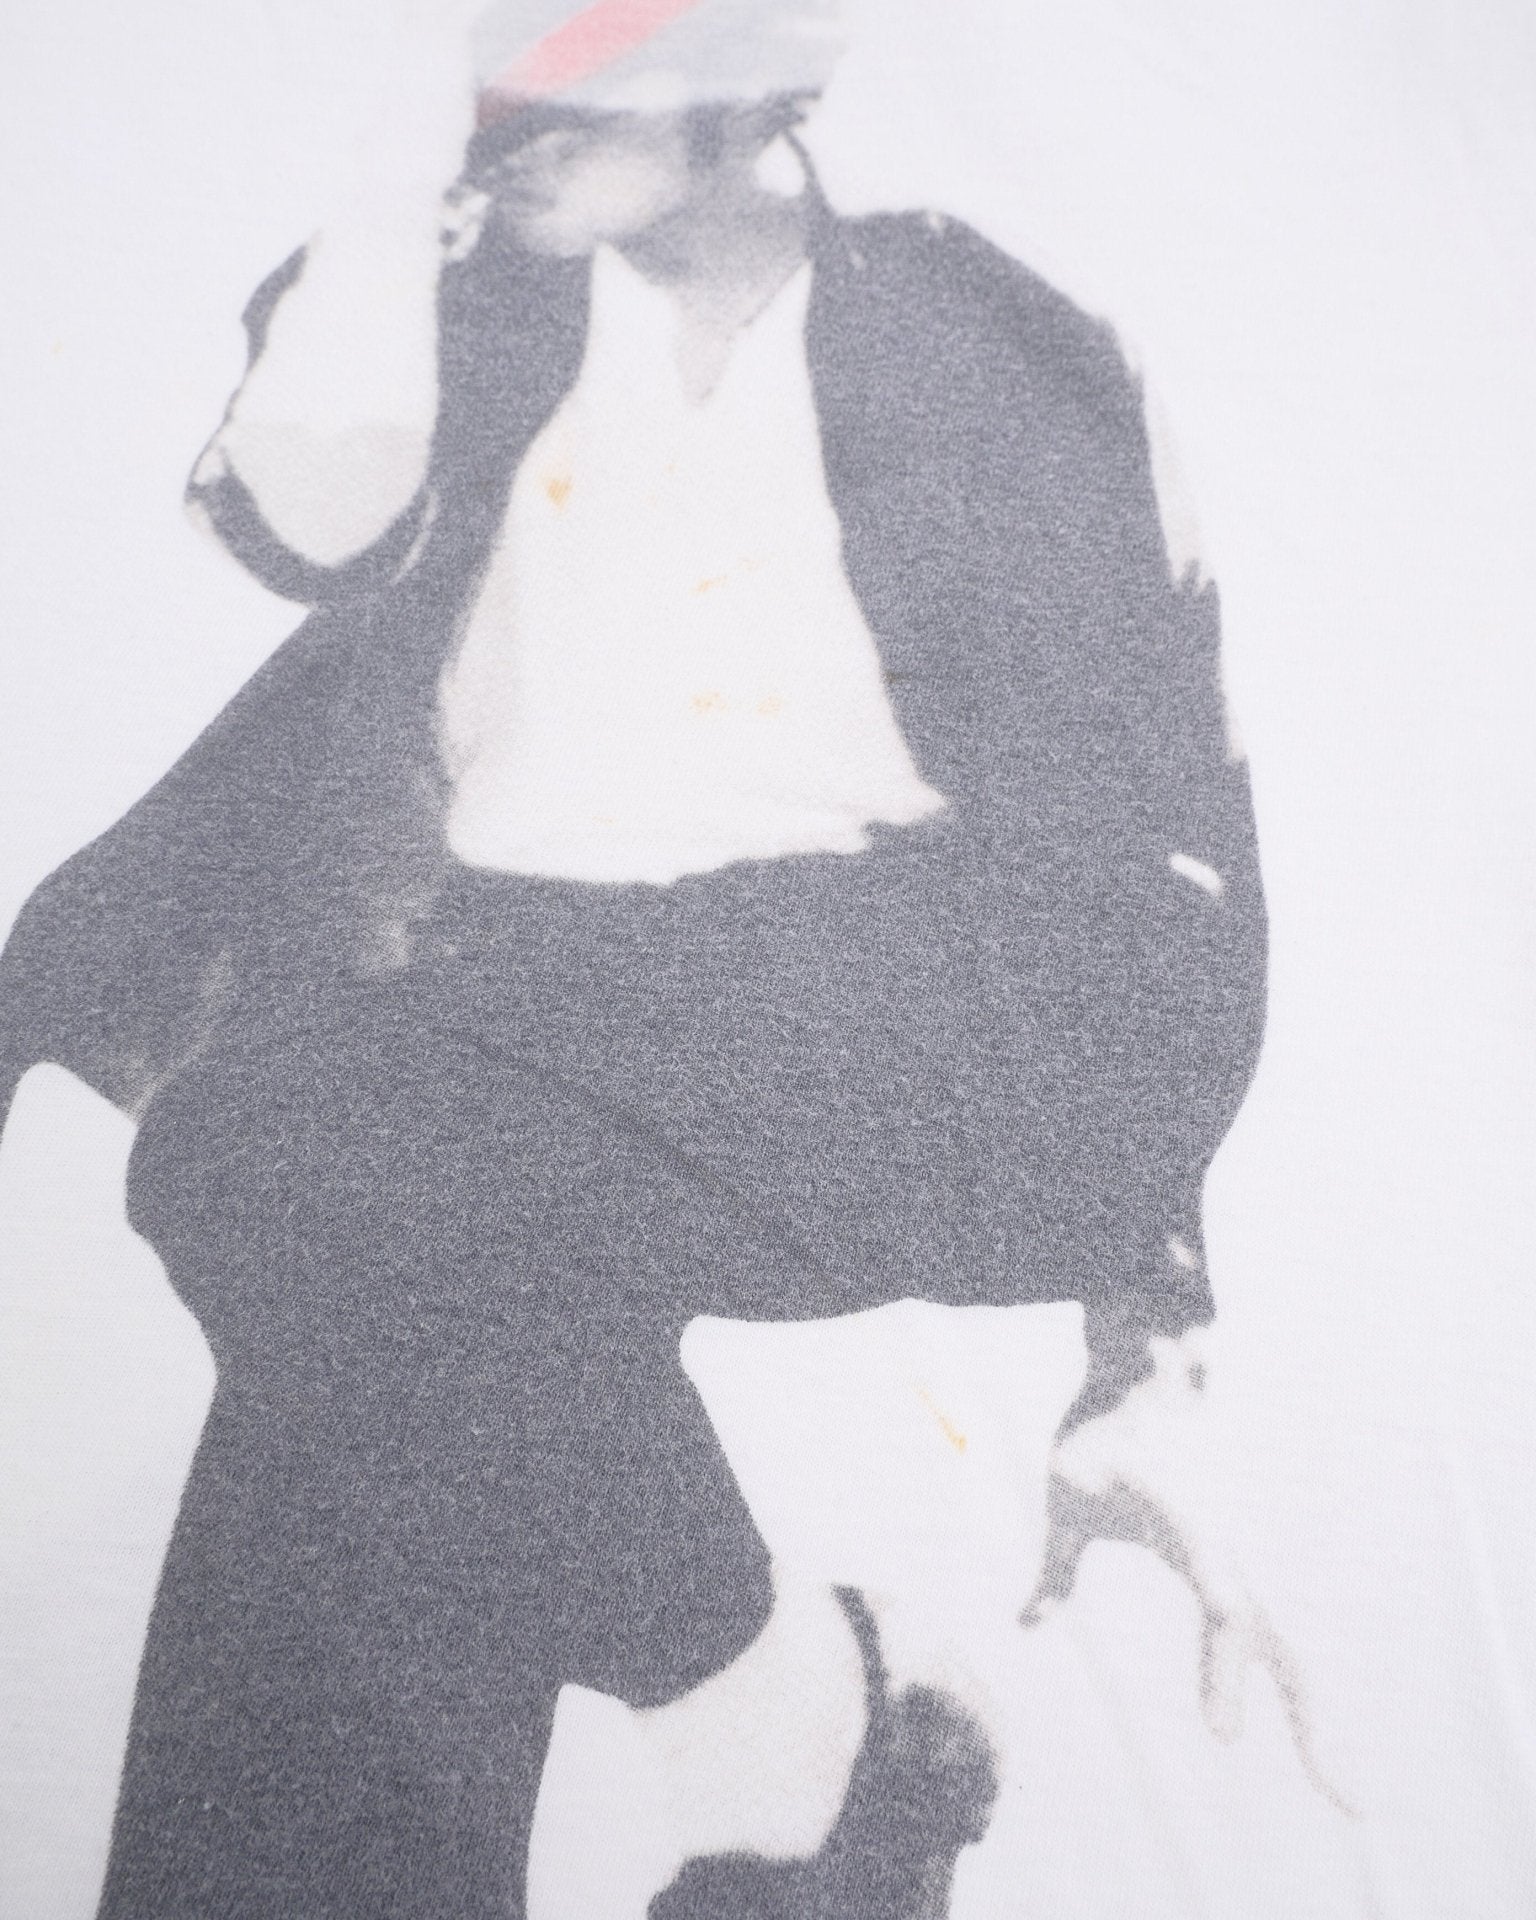 Michael Jackson printed Graphic Vintage Shirt - Peeces